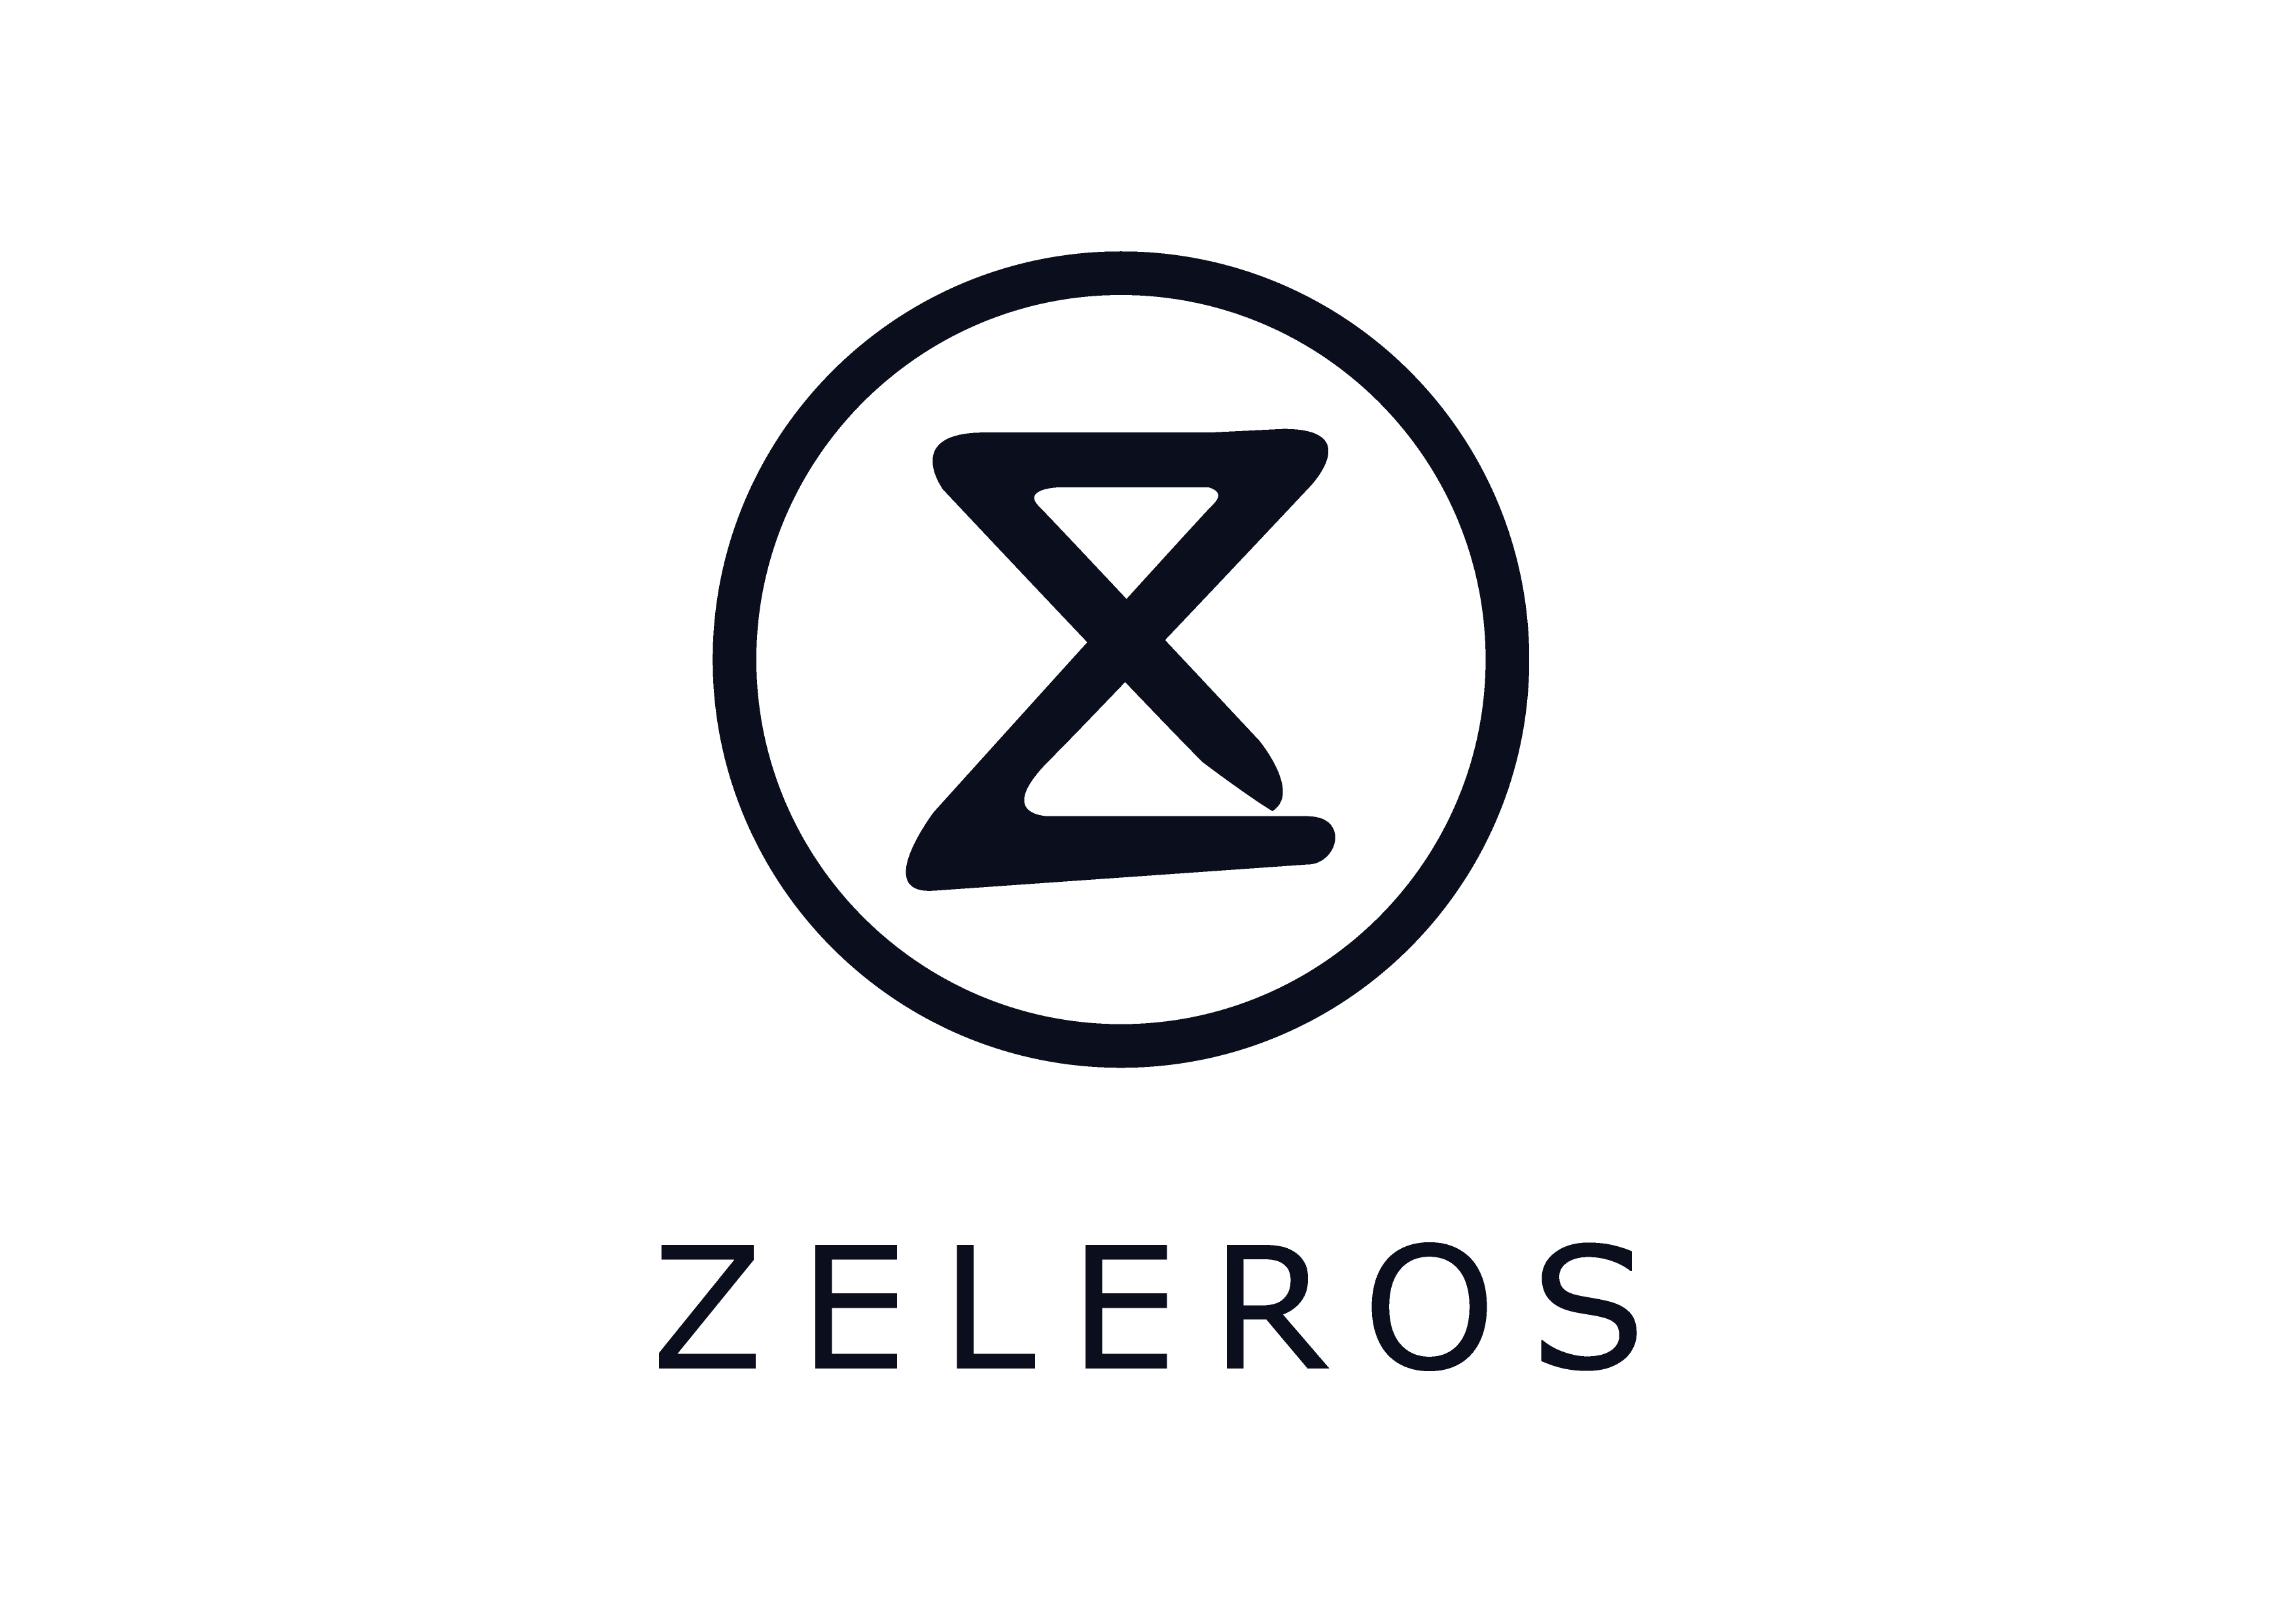 Zeleros's logo